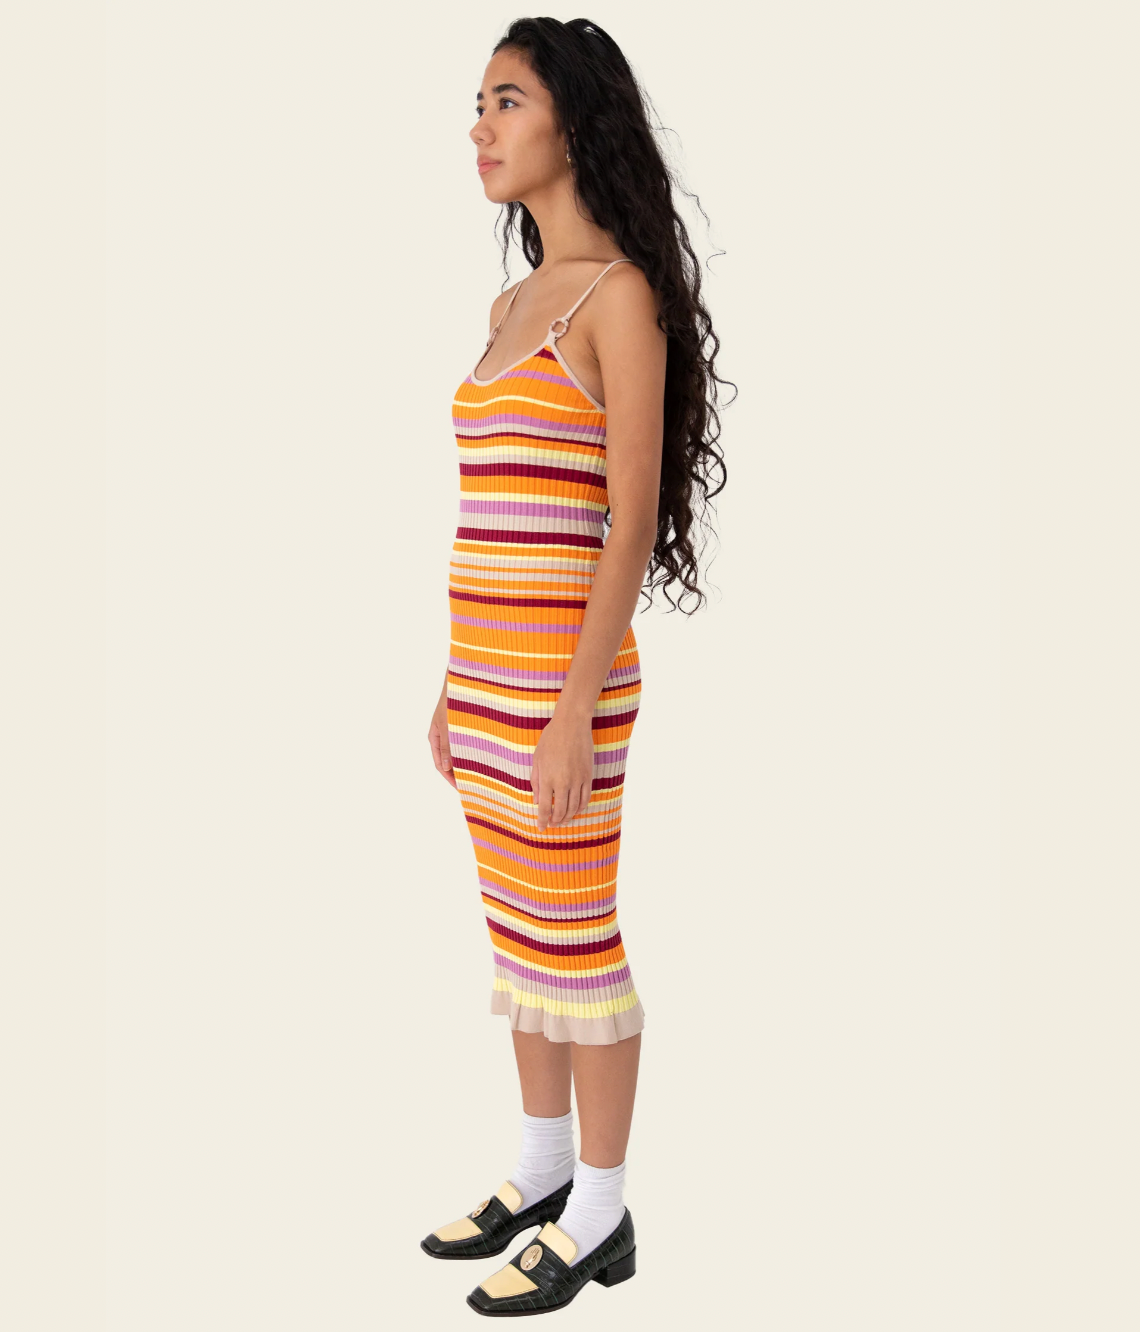 Product Image for Luke Knit Dress, Sorbet